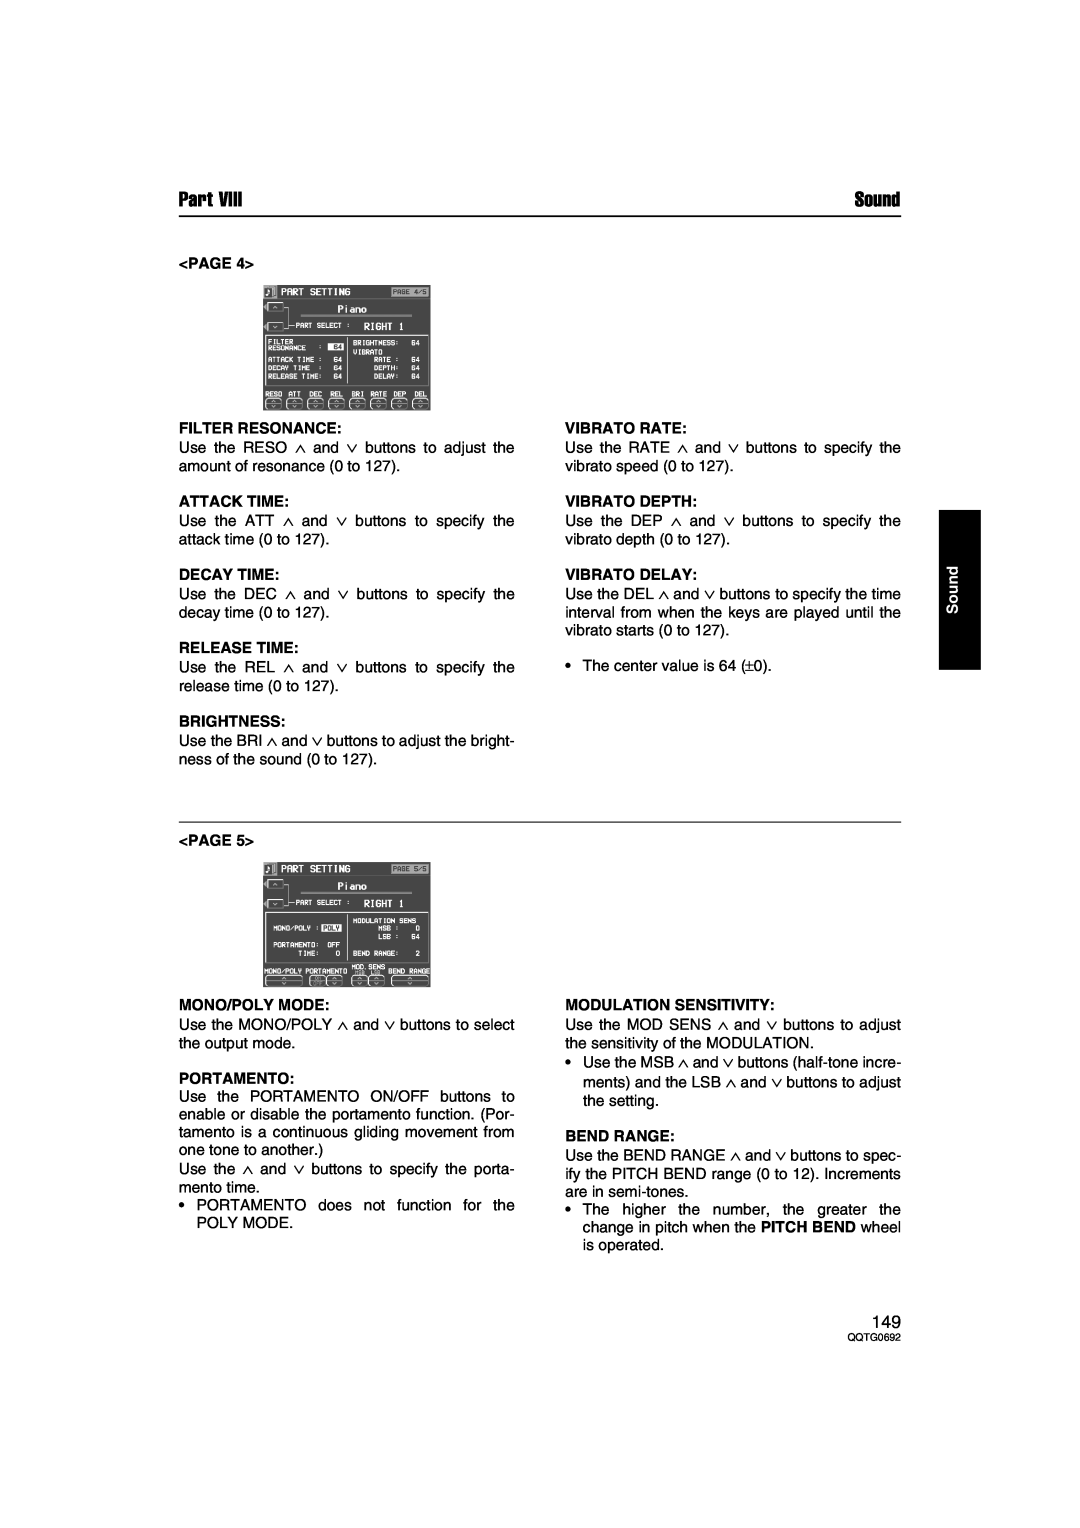 Panasonic SX-KN2400 Page Filter Resonance, Attack Time, Decay Time, Release Time, Brightness, Vibrato Rate, Vibrato Depth 